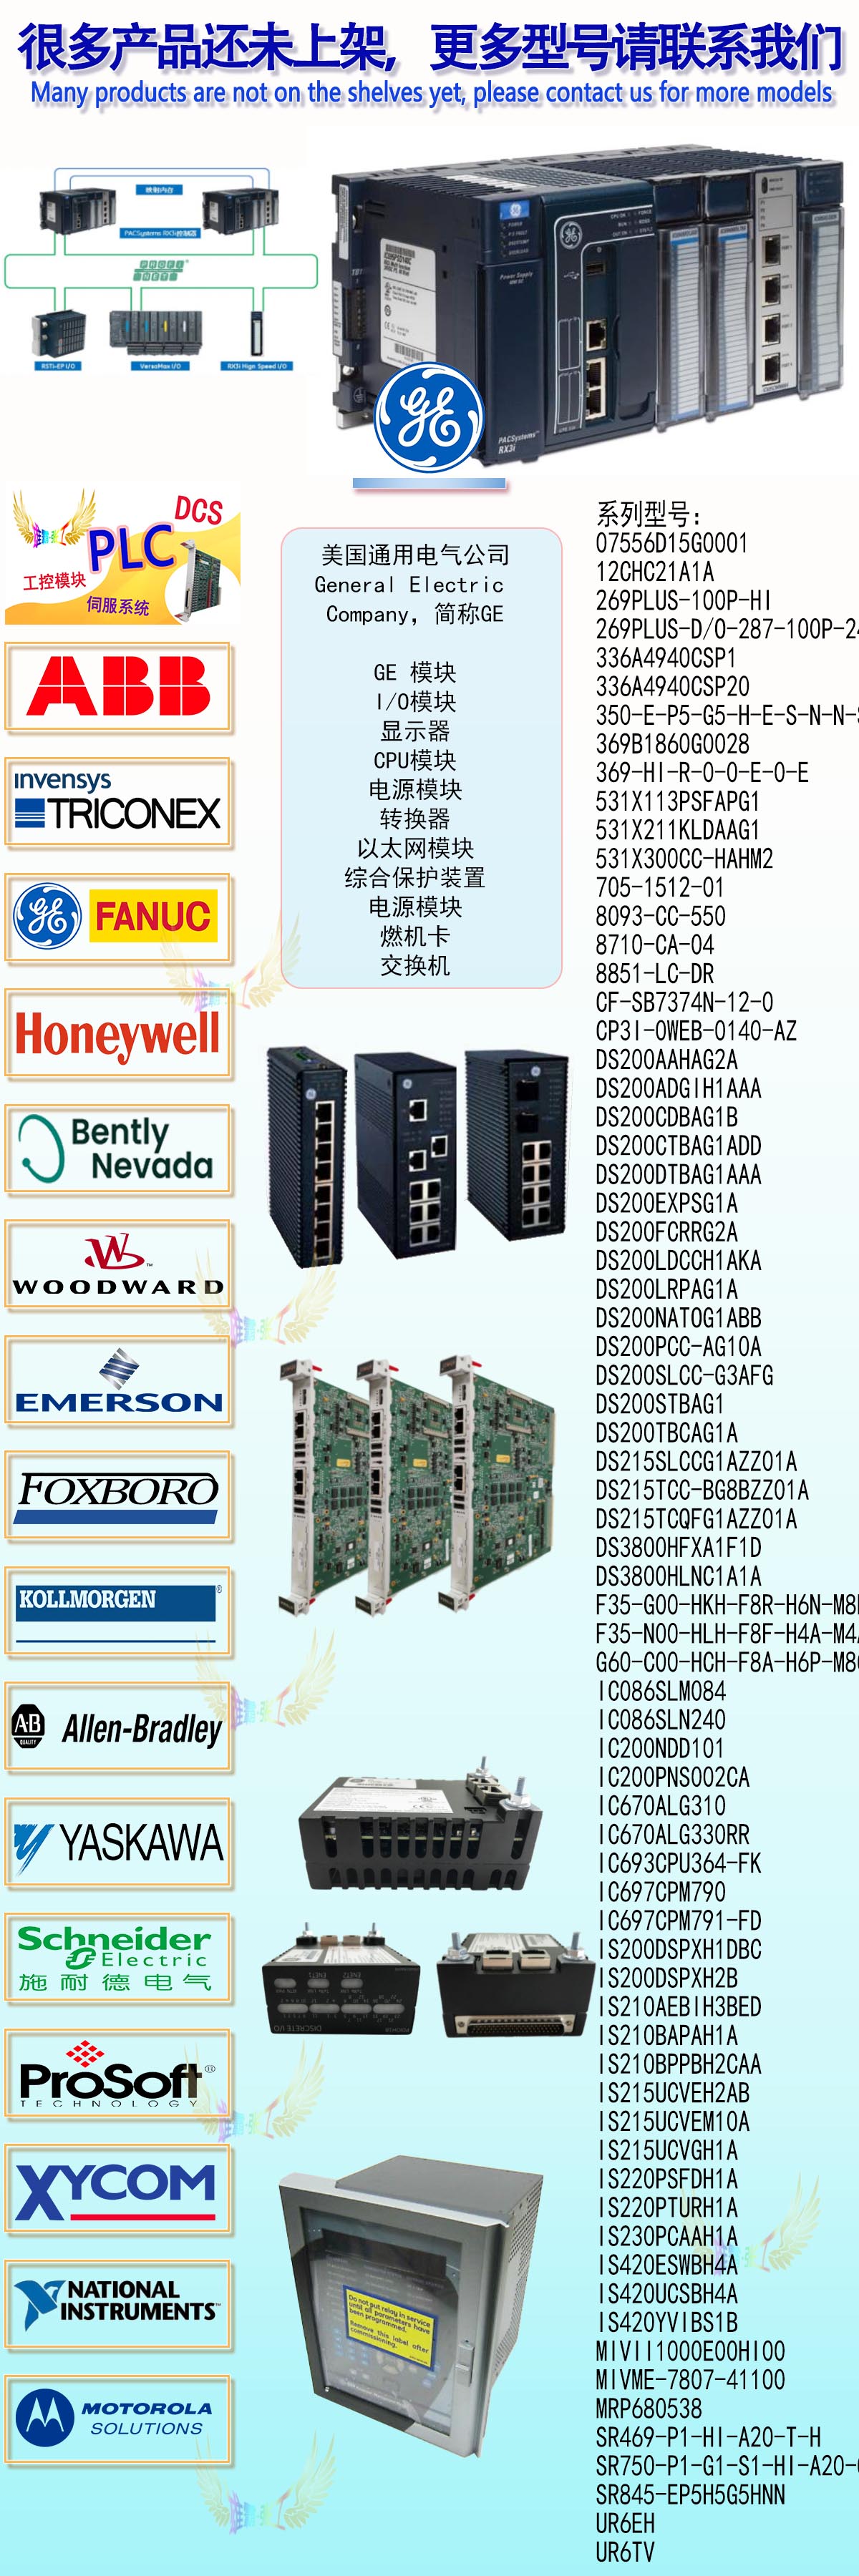 GE通用自动化 531X121PCRALG1控制器，电源模块，PLC/DCS 